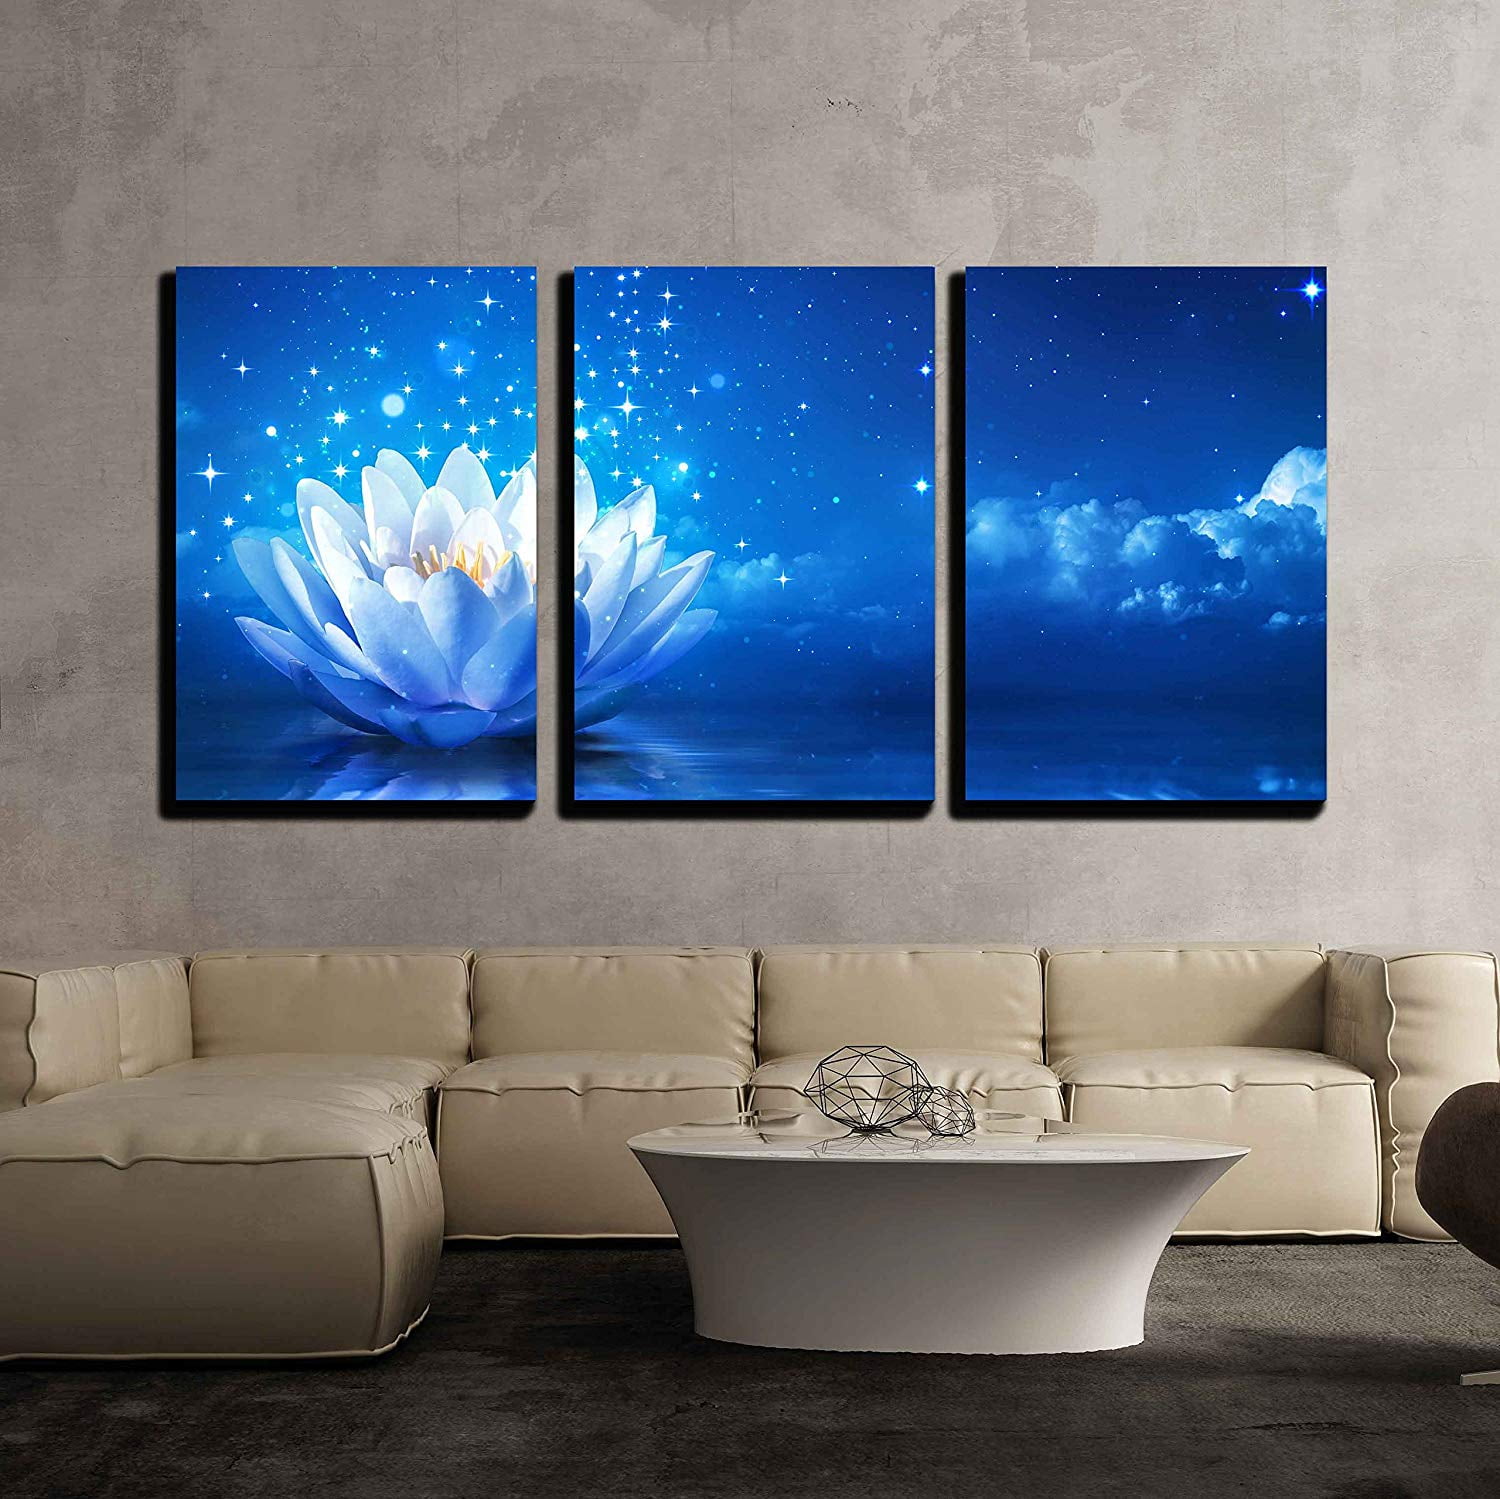 DIYthinker Lotus Plant Island Painting Desktop Photo Frame Picture Art Decoration Painting 6x8 inch 